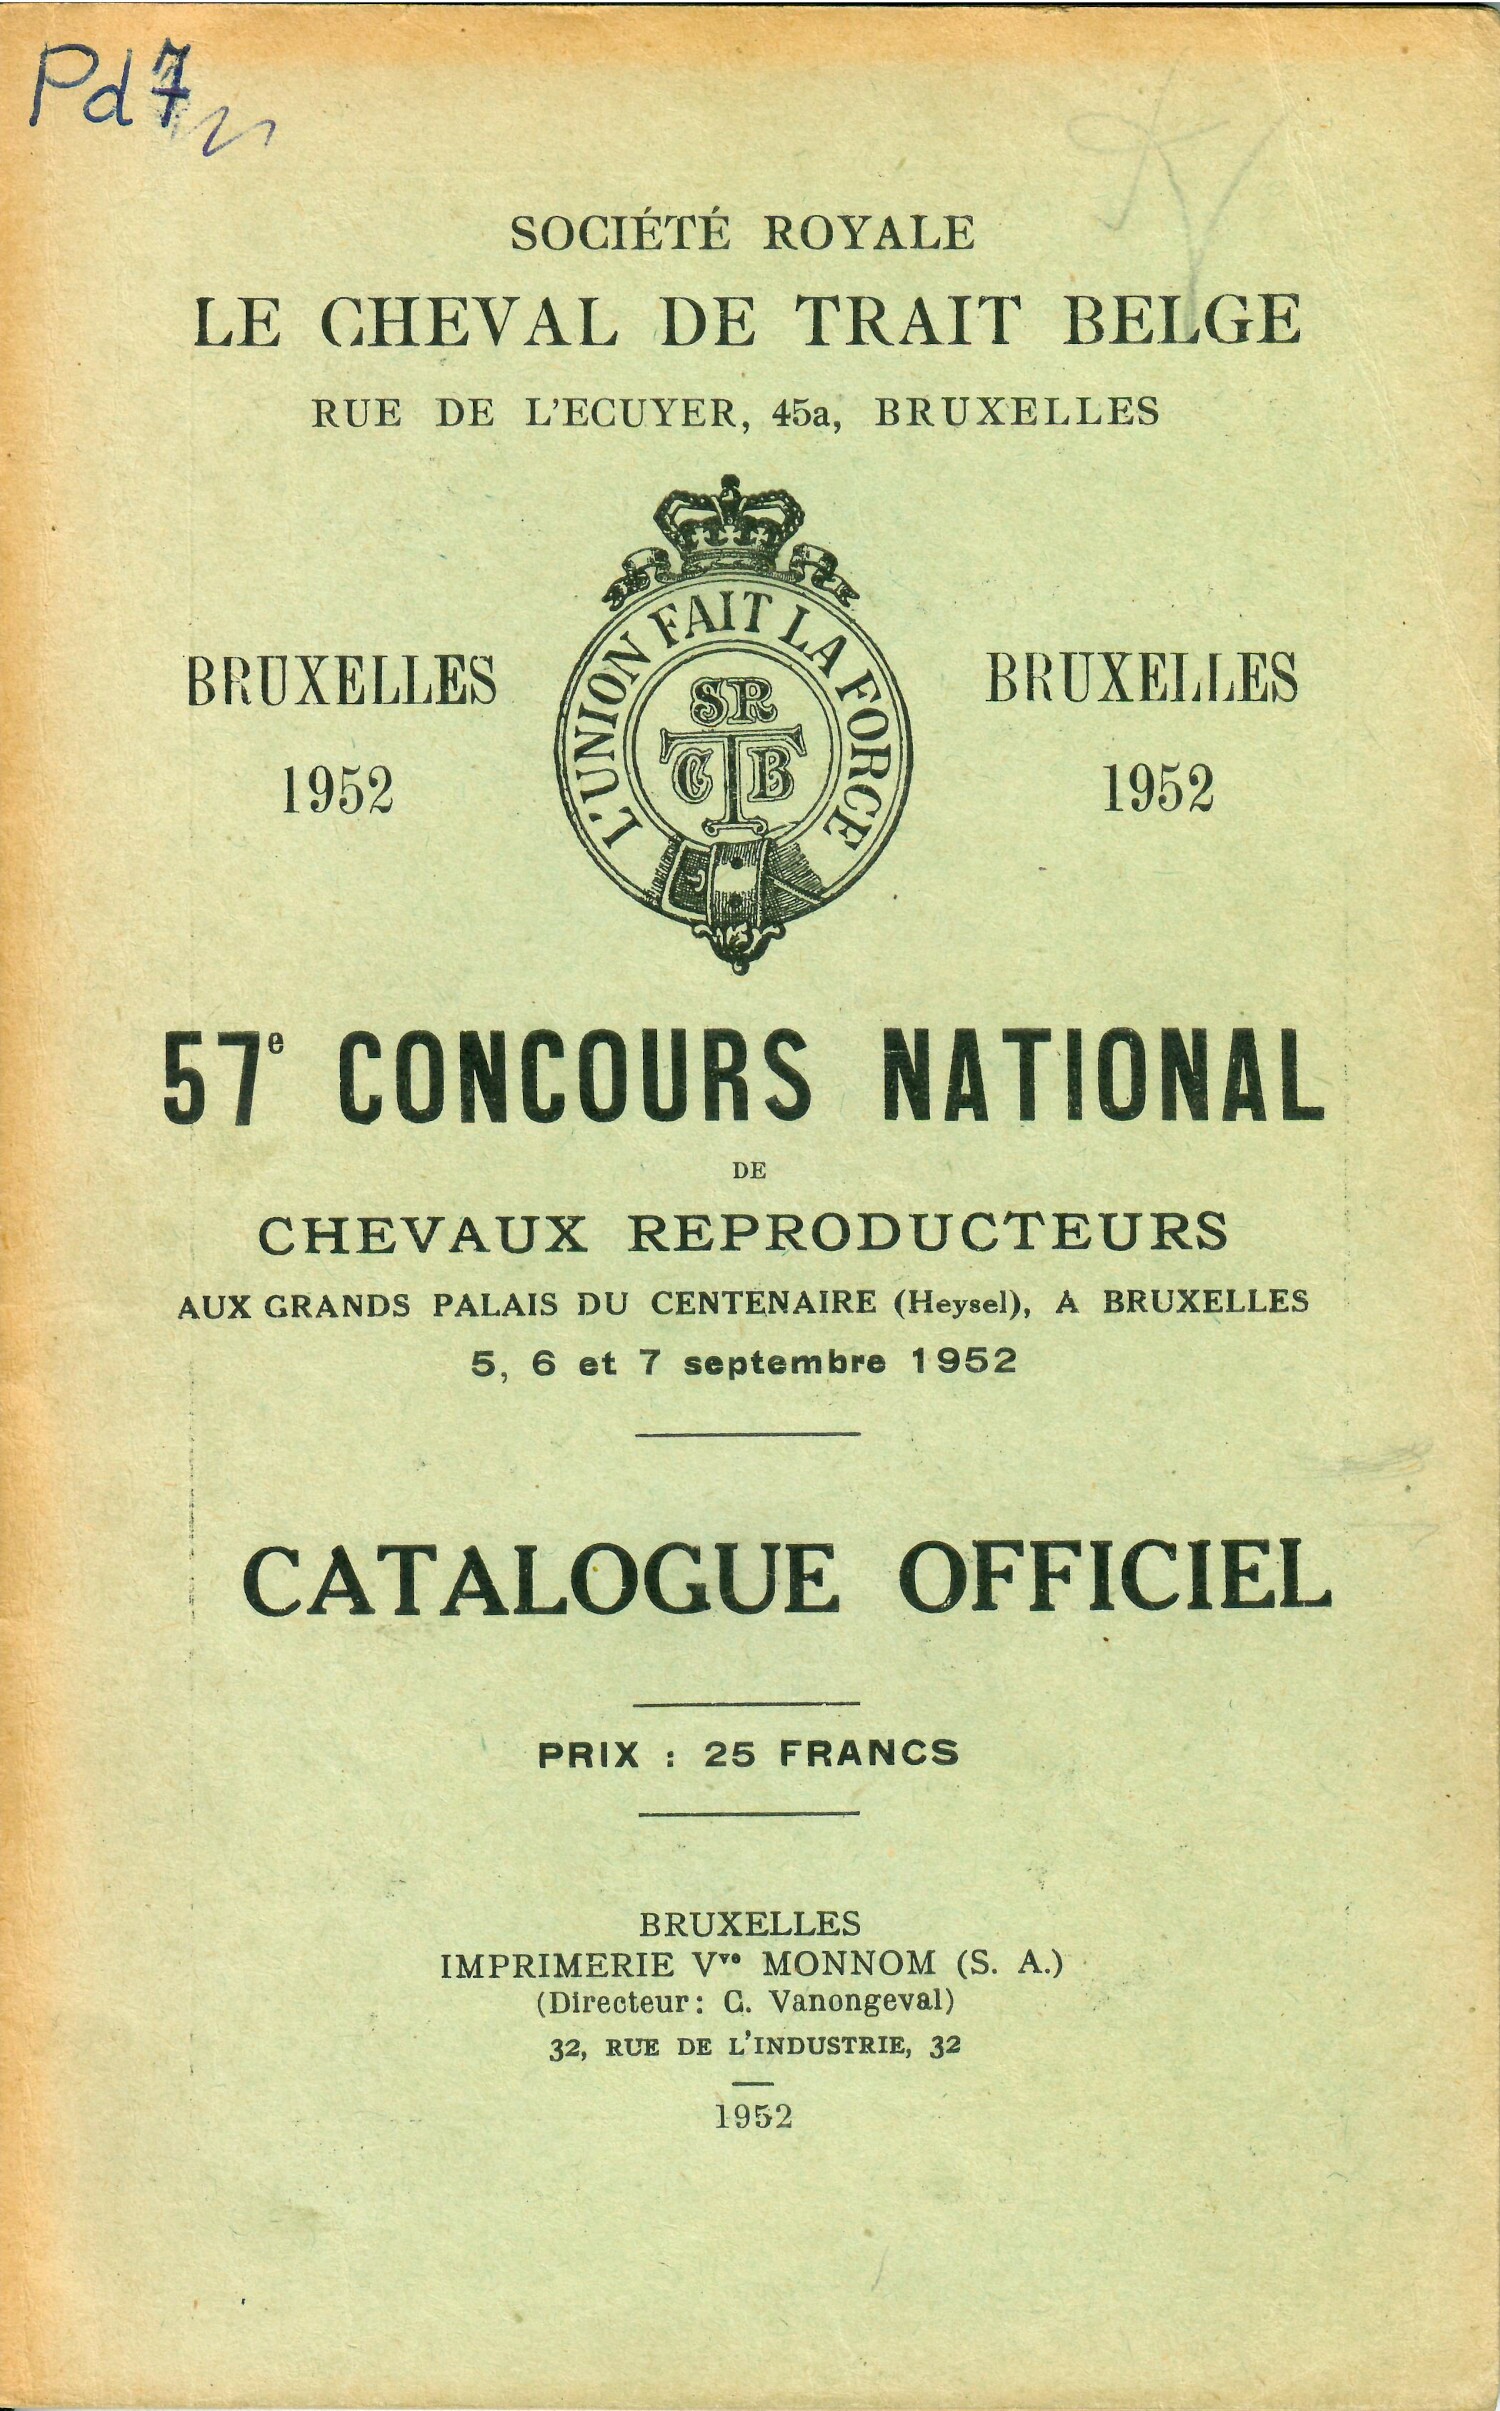 Les Cheval de trait belge et adennes 1952 (Herausgeber RR-R)